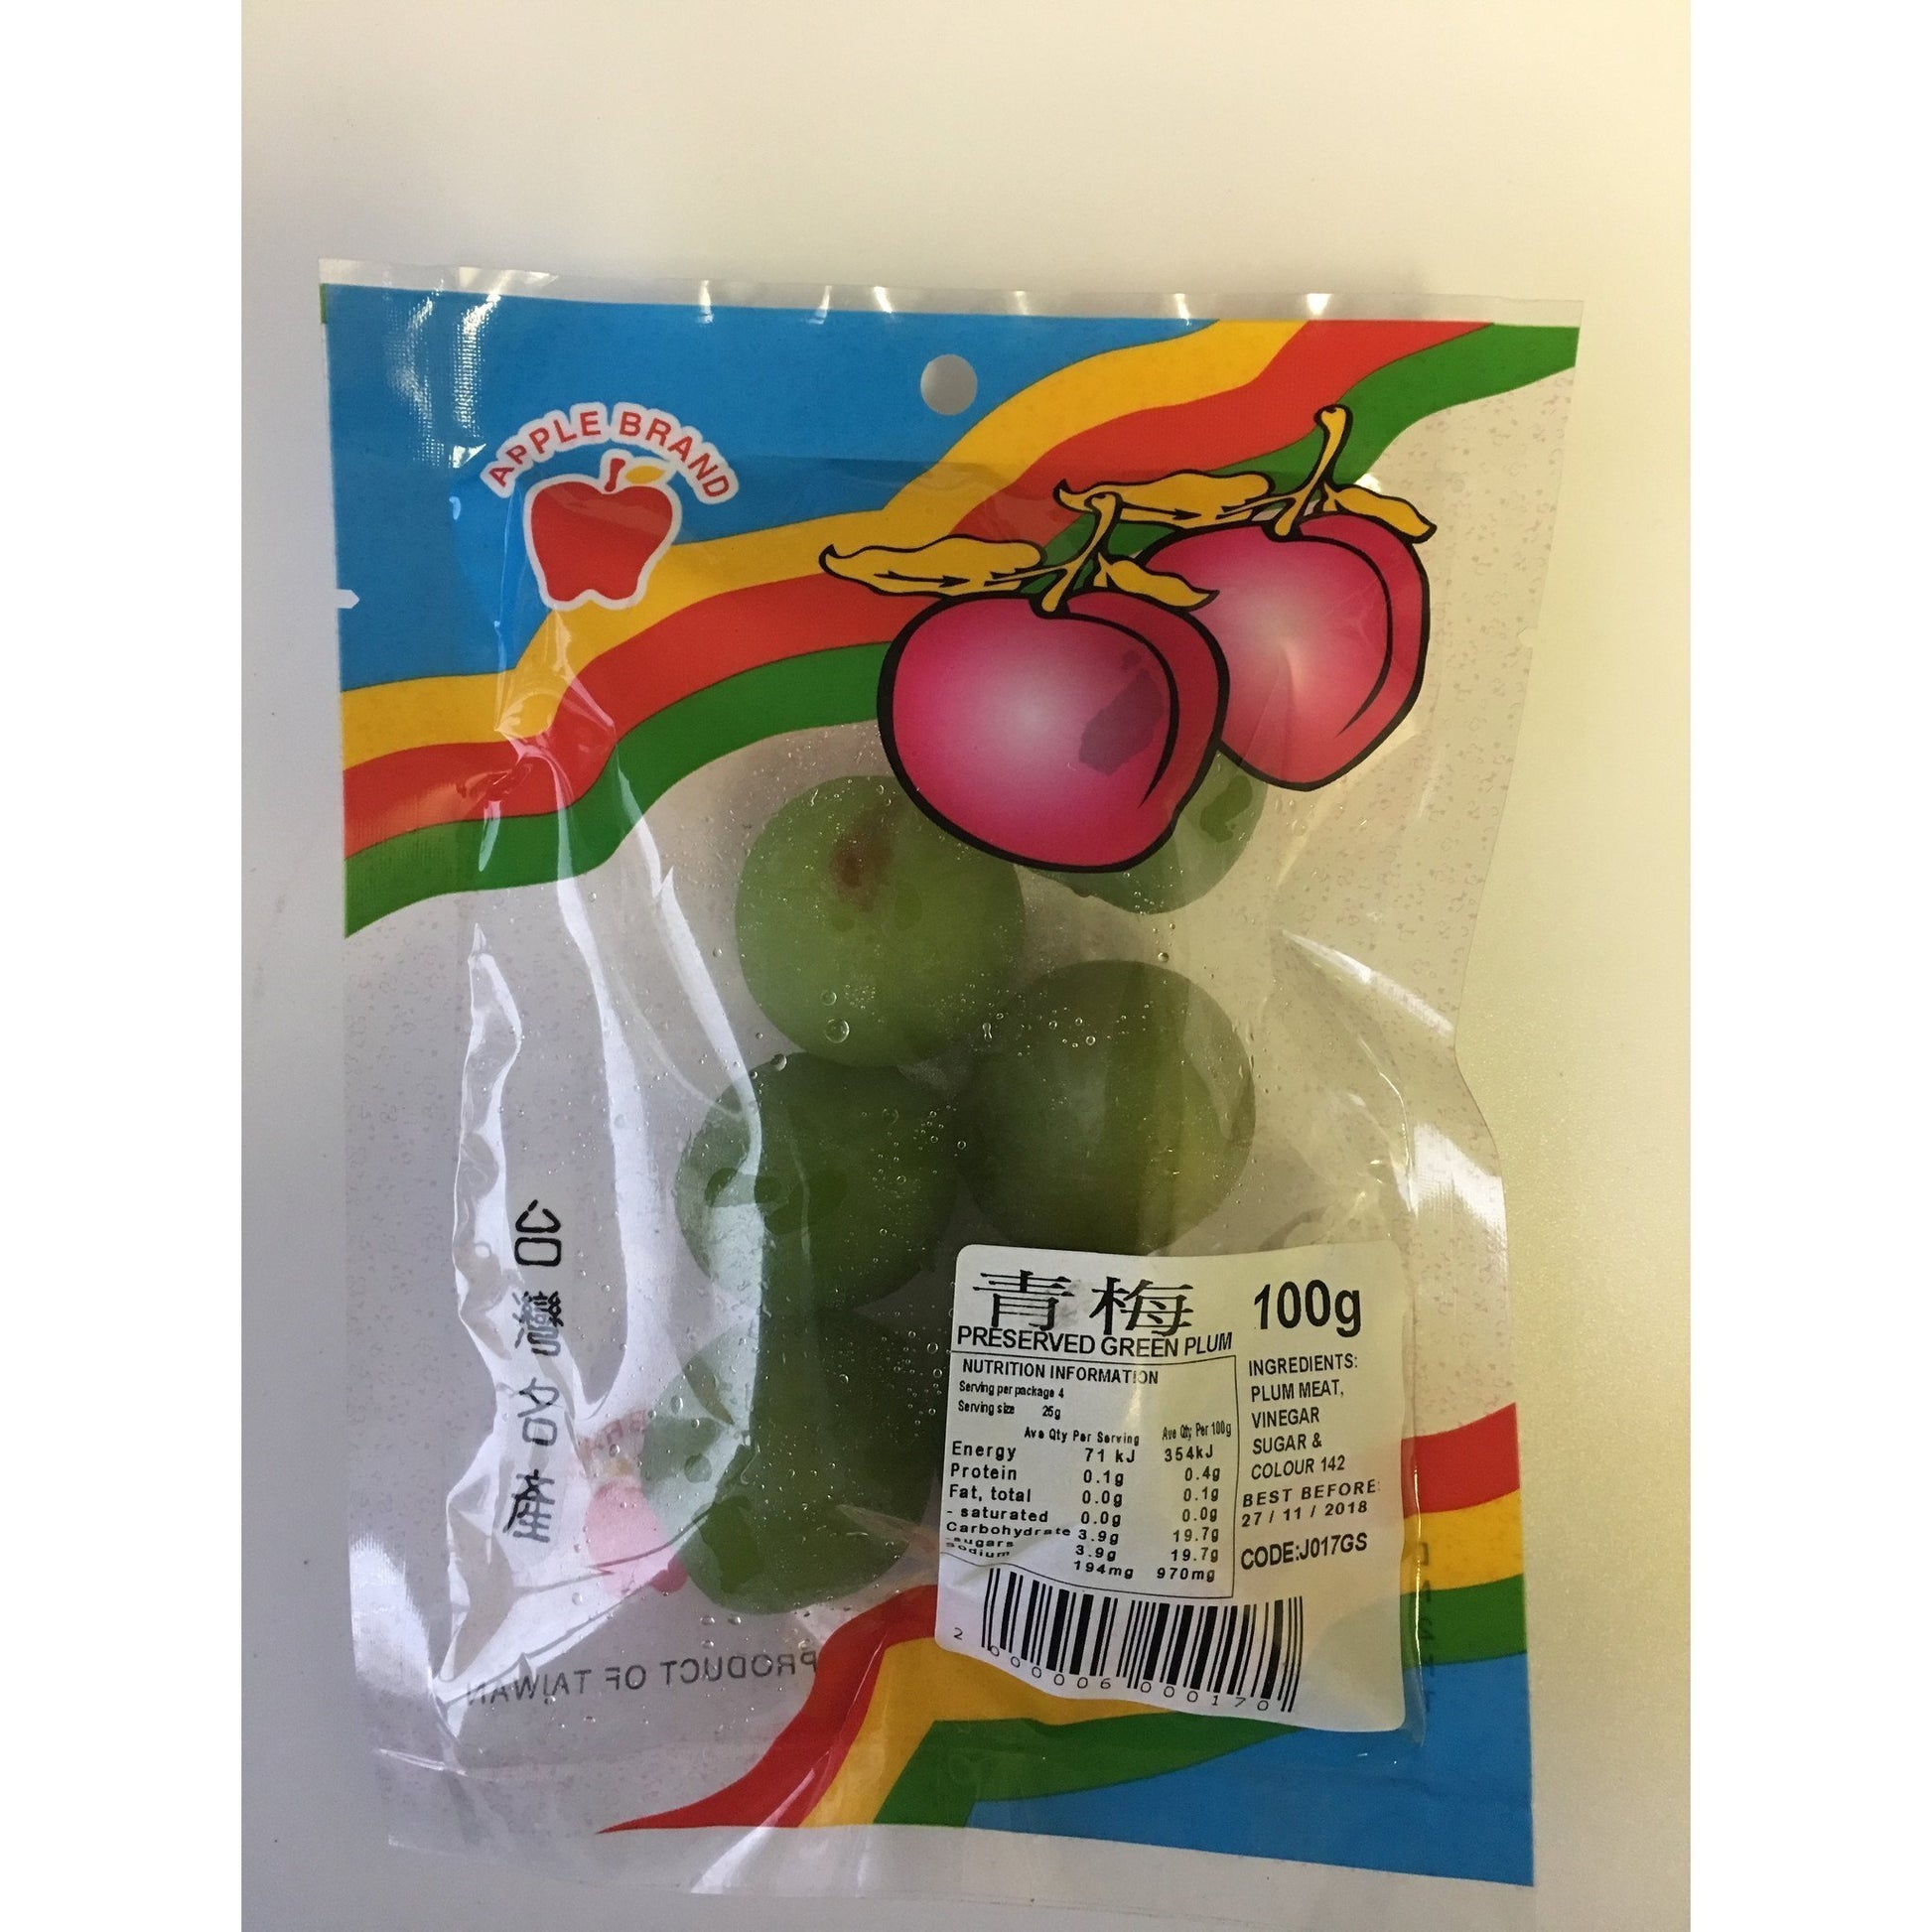 J017GS Apple brand - Preserved Green Plum 100g - 10 packet / 1 Bag - New Eastland Pty Ltd - Asian food wholesalers